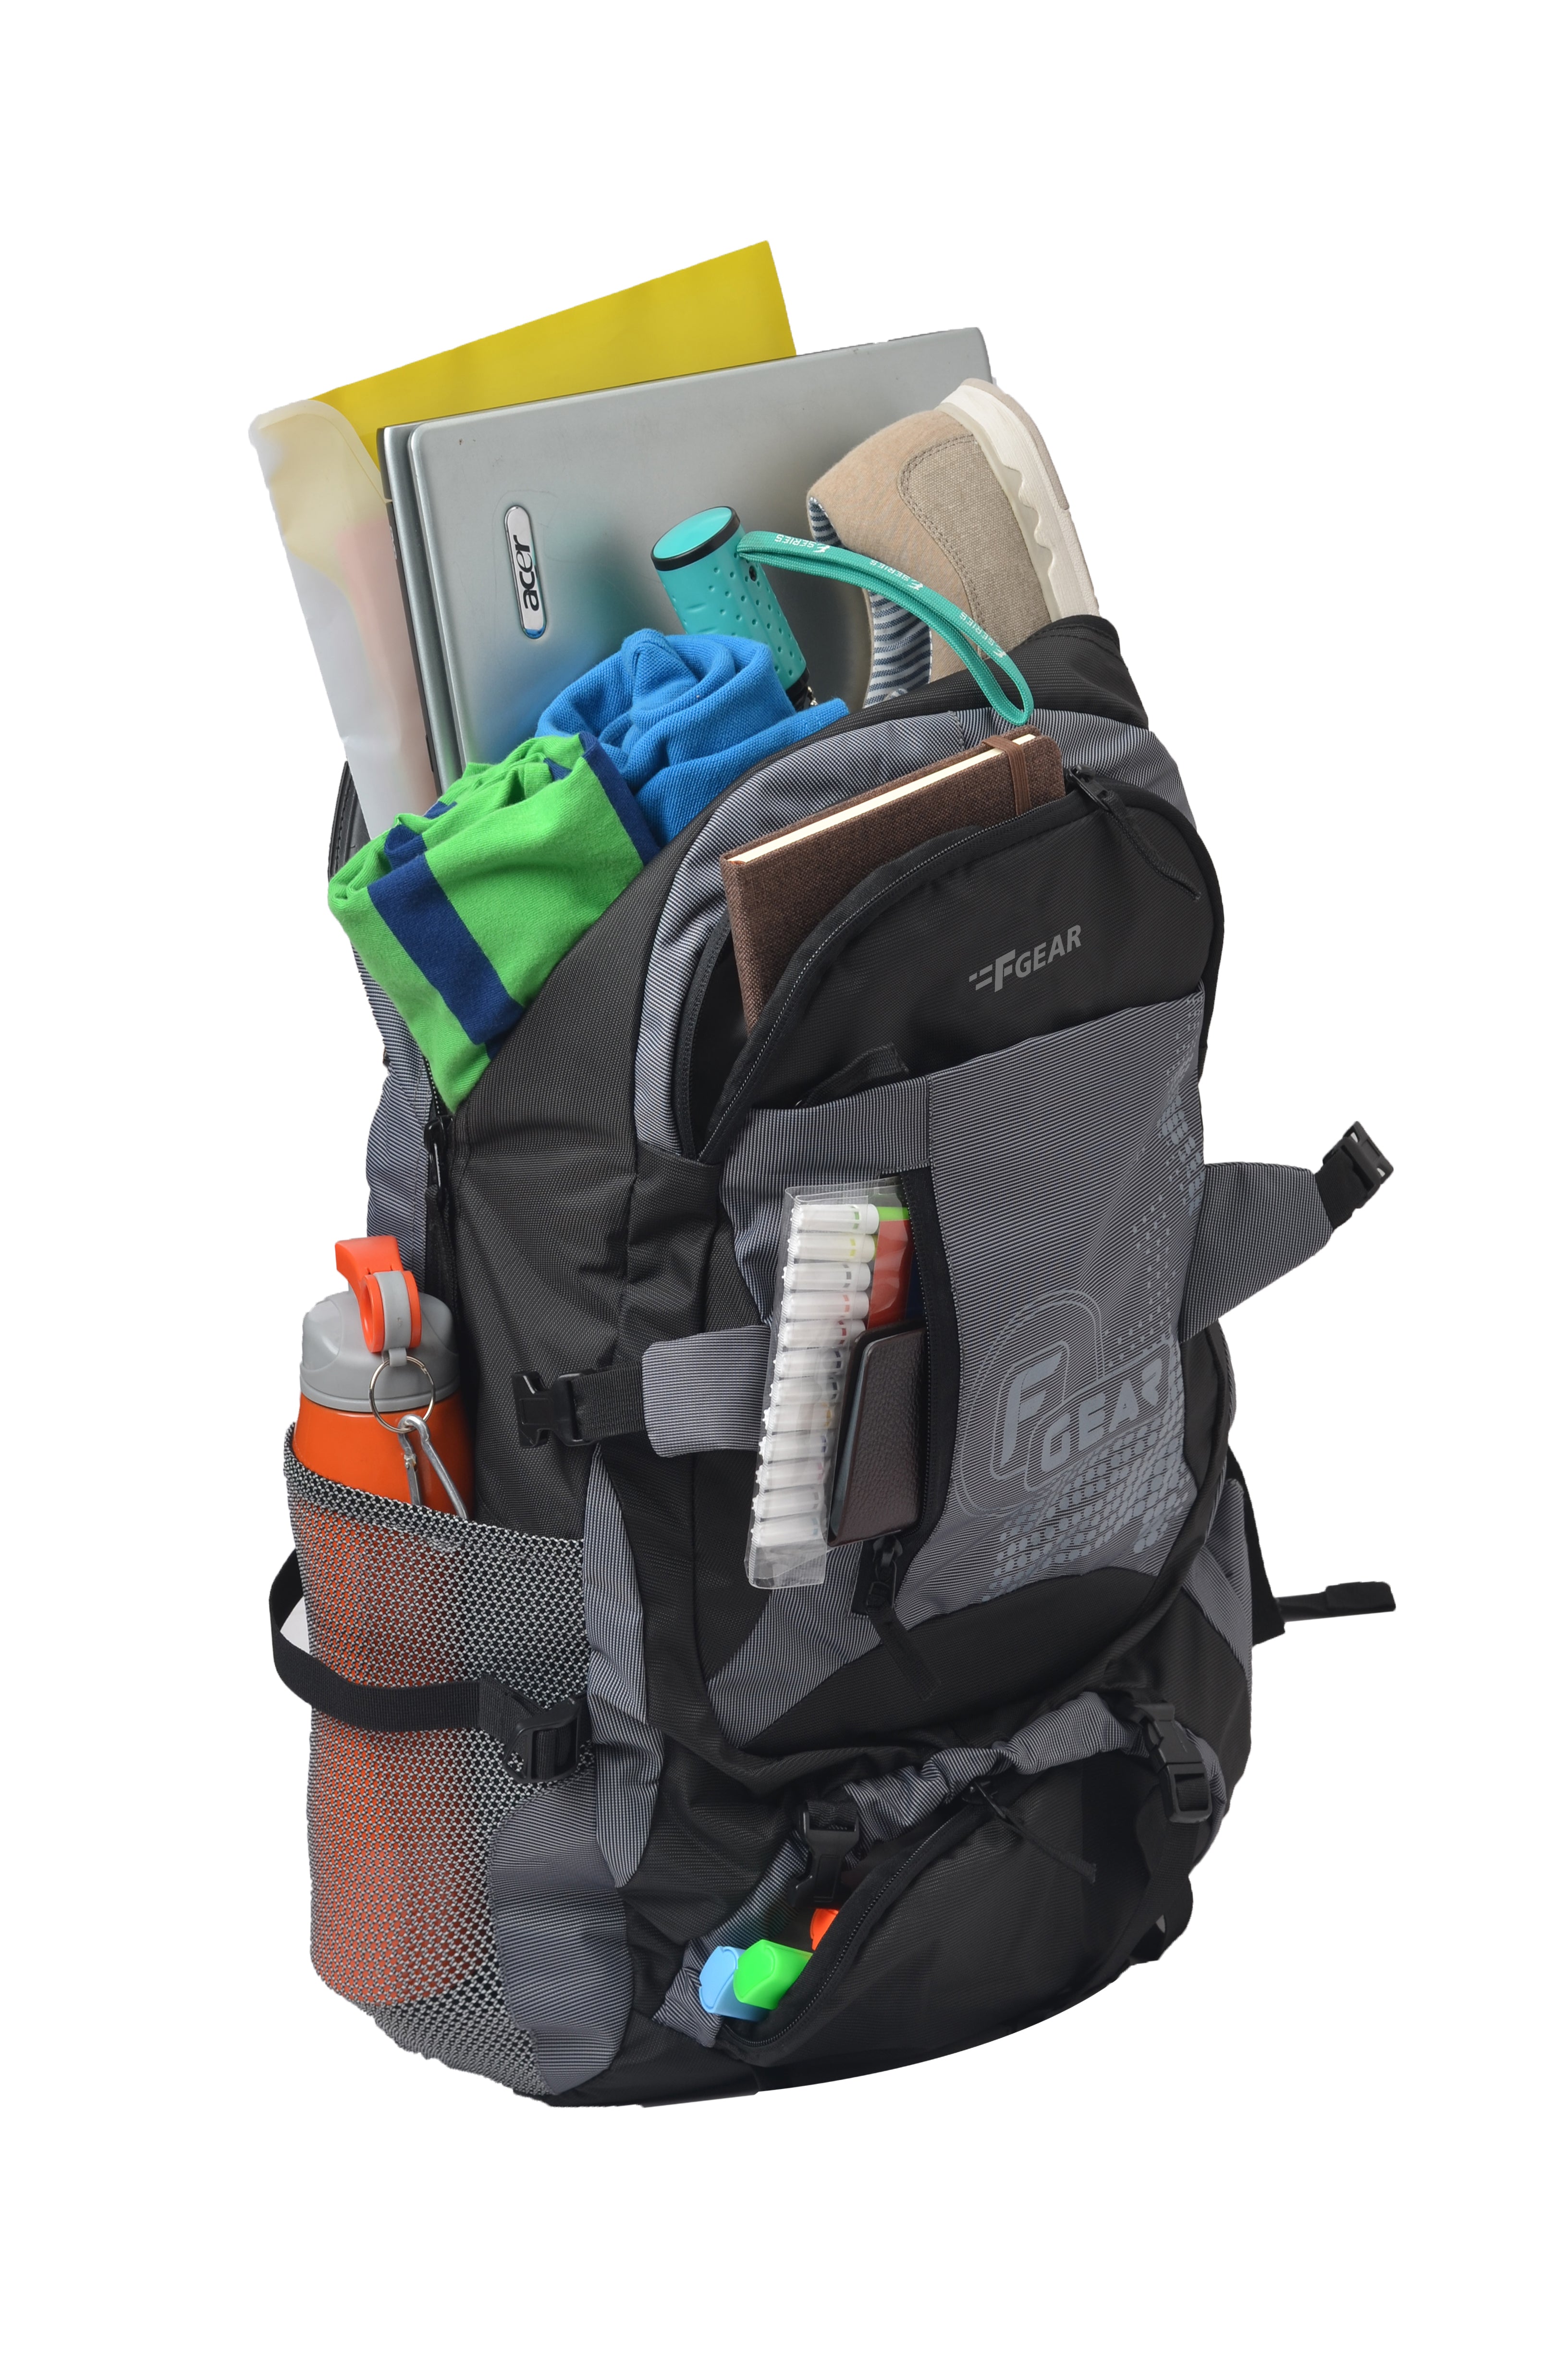 TRAWOC HK007 SKYBLUE 80 Ltr Trekking Bag Hiking Backpack Travel Backpack (  1 year warranty) Rucksack - 80 L Sky Blue, black, yellow - Price in India |  Flipkart.com